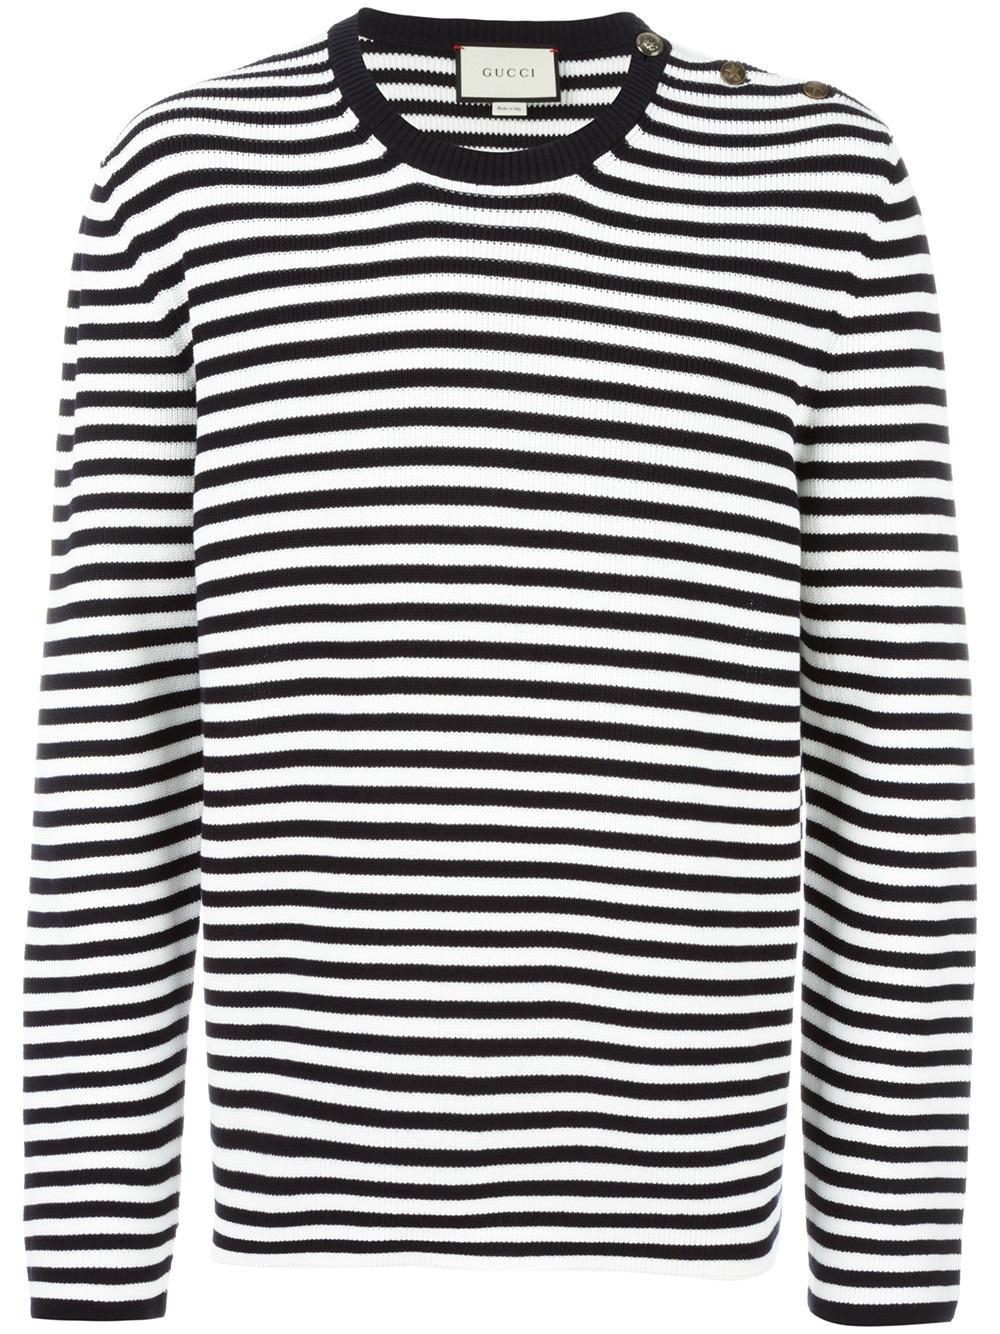 Gucci Jersey De Rayas Con Cuello Redondo 9171 Hombre - Gucci Long Sleeve Striped Shirt , HD Wallpaper & Backgrounds